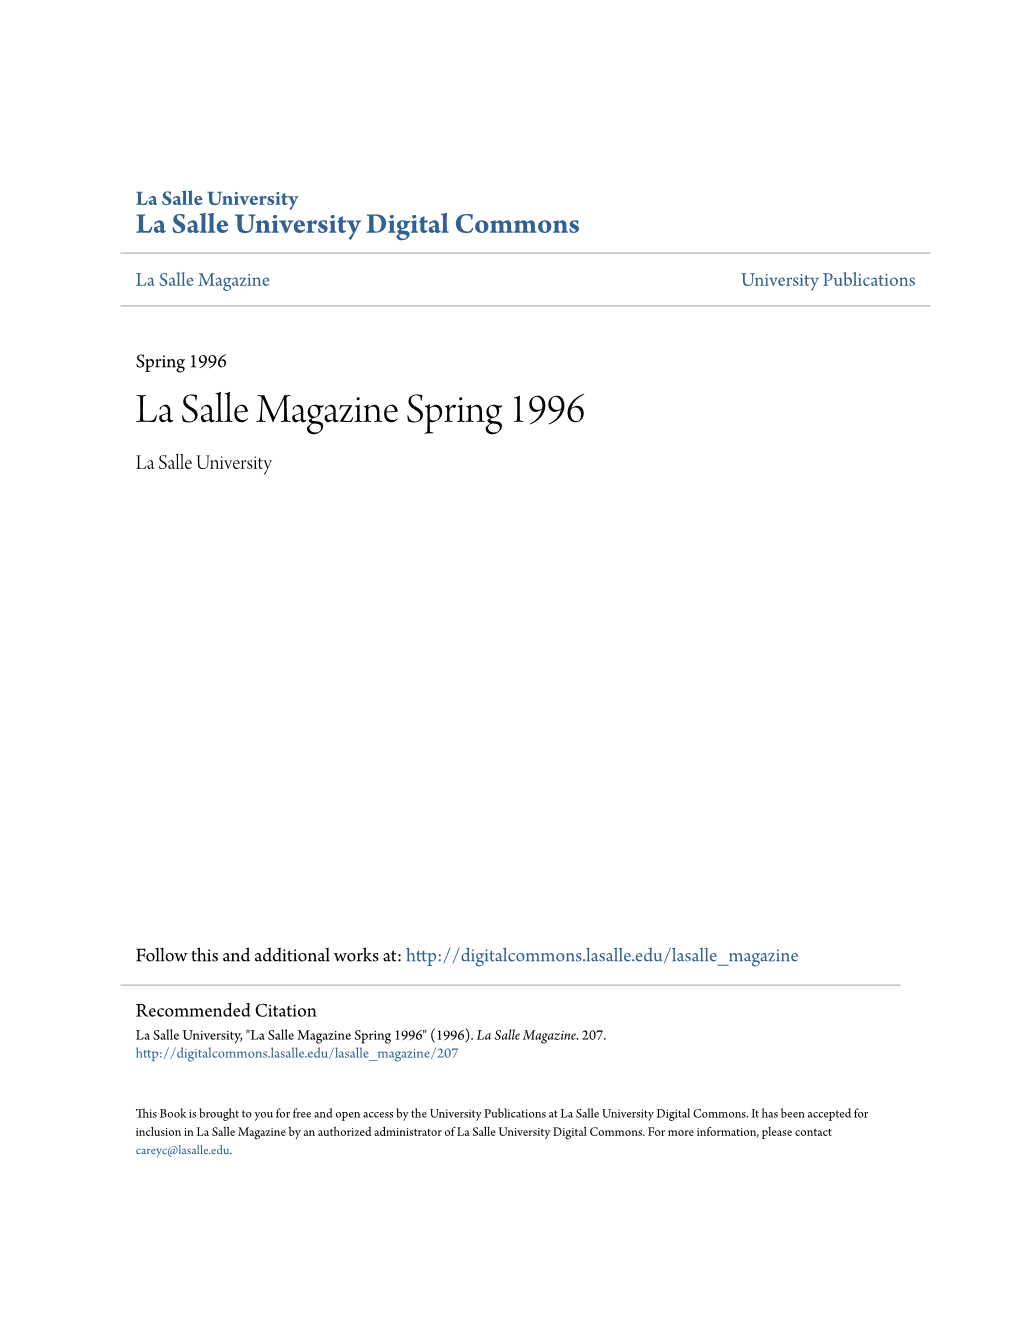 La Salle Magazine Spring 1996 La Salle University